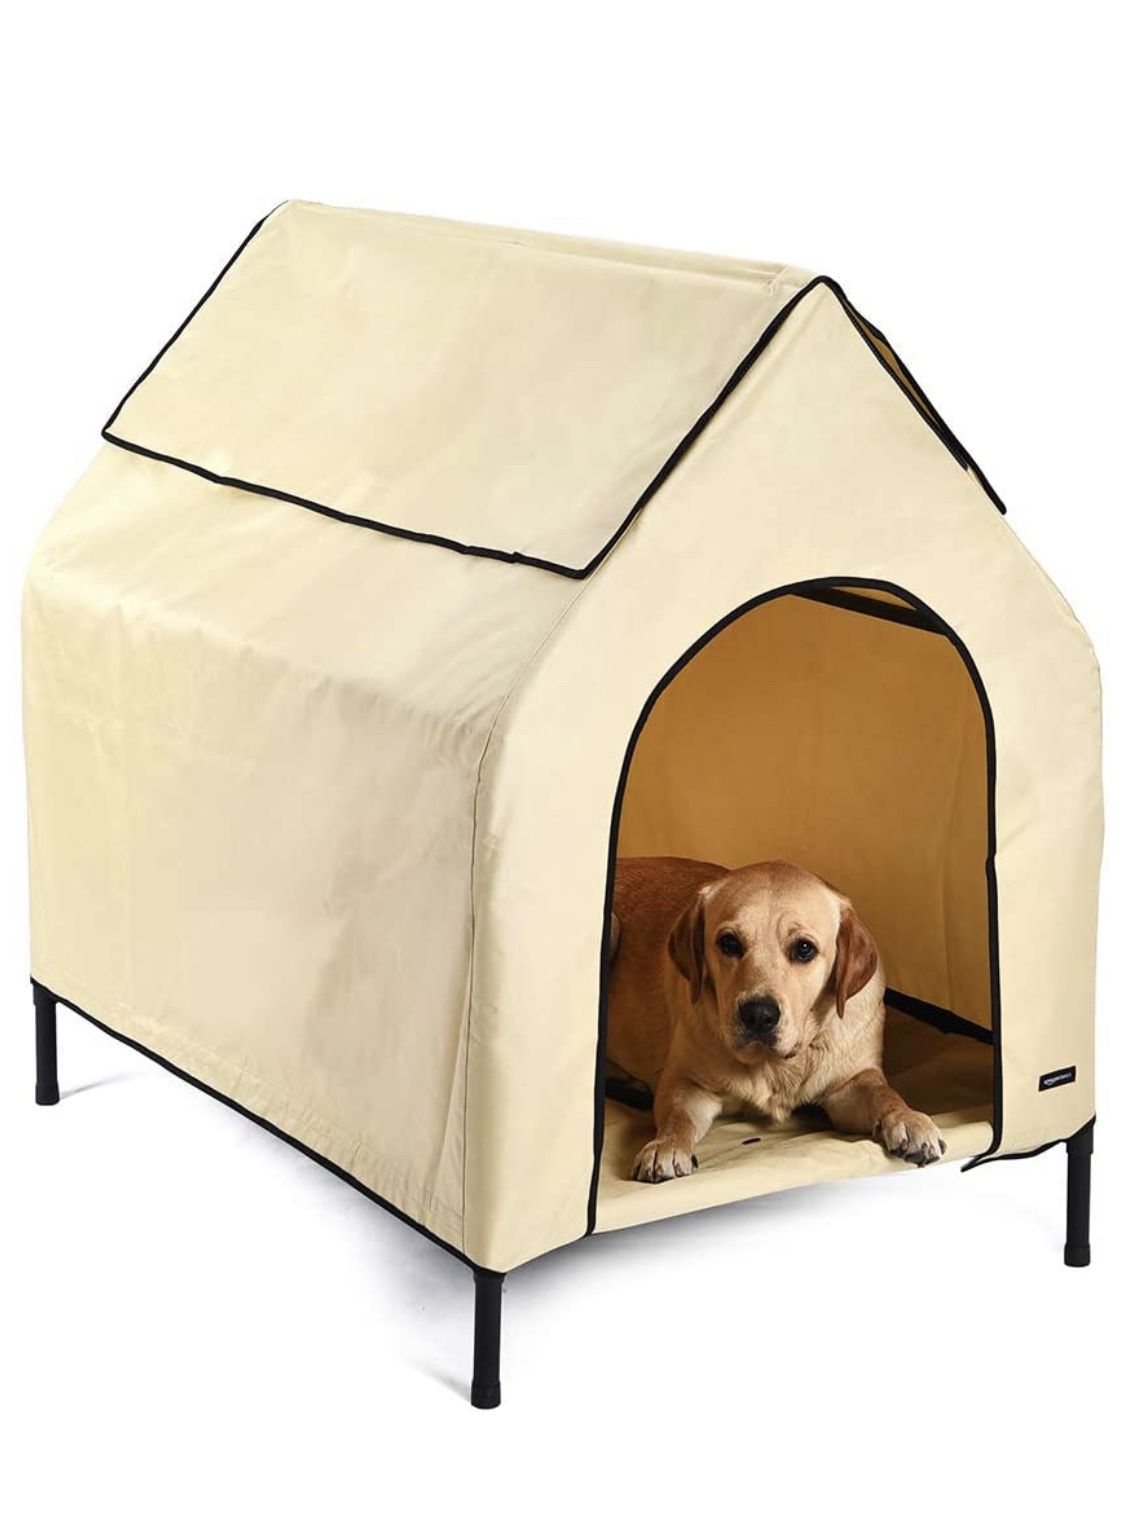 New in box 0 gravity dog house- Medium